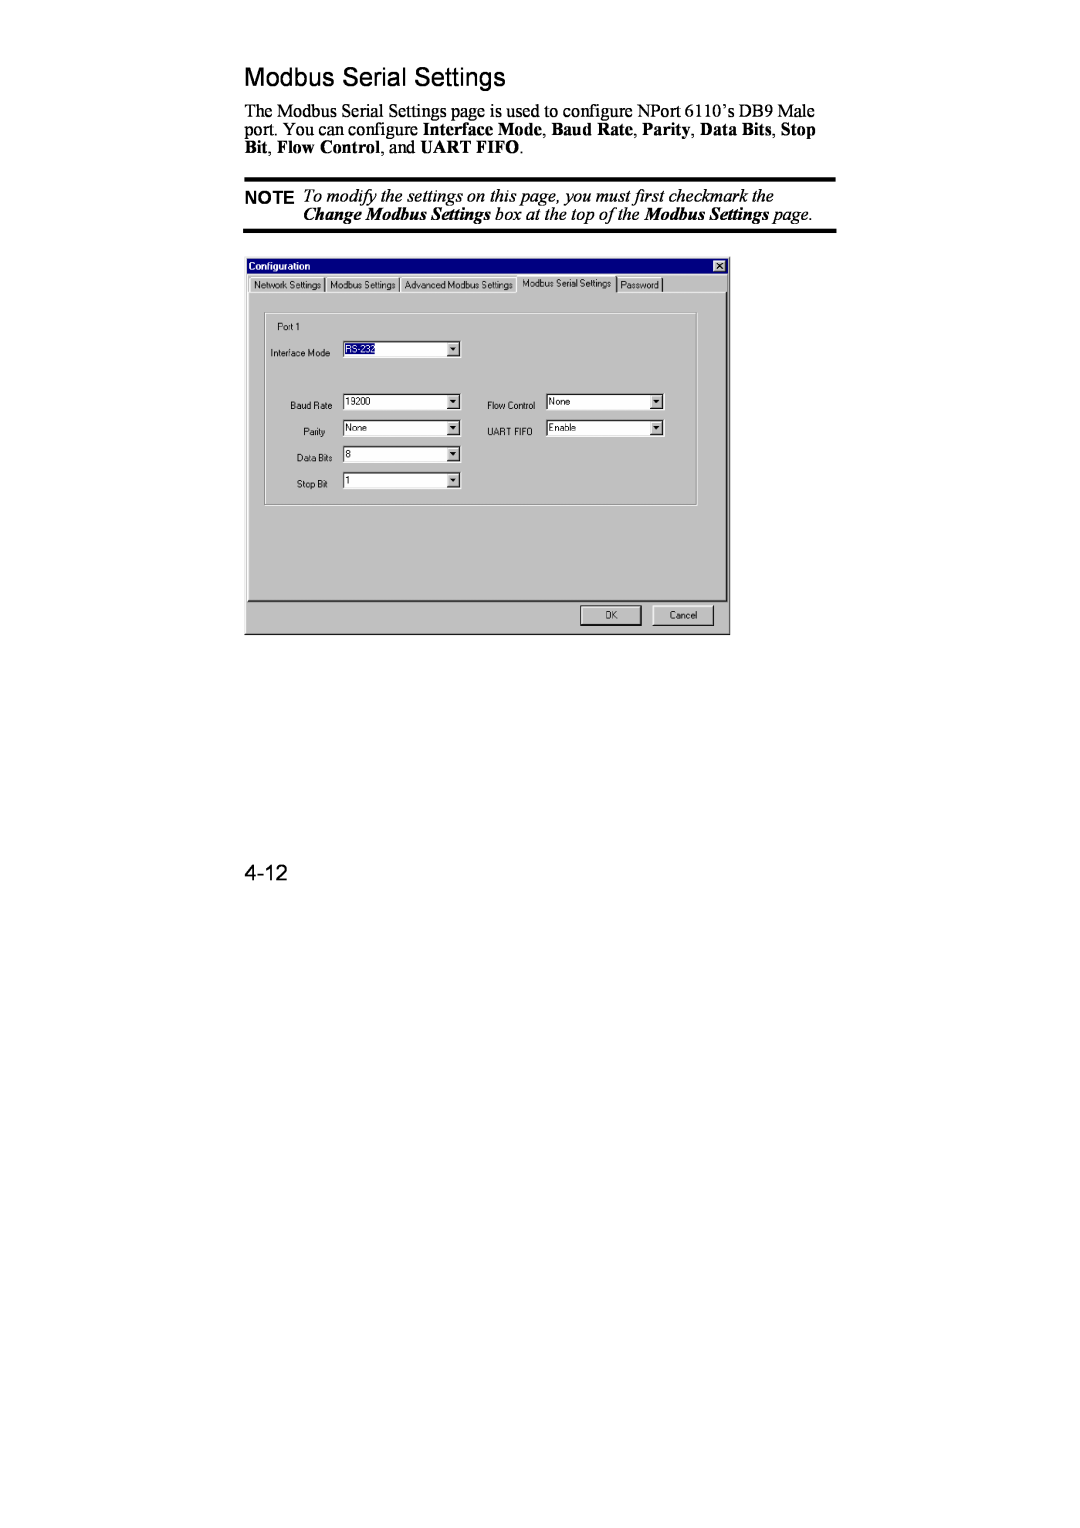 Moxa Technologies 6110 user manual Modbus Serial Settings, 4-12 